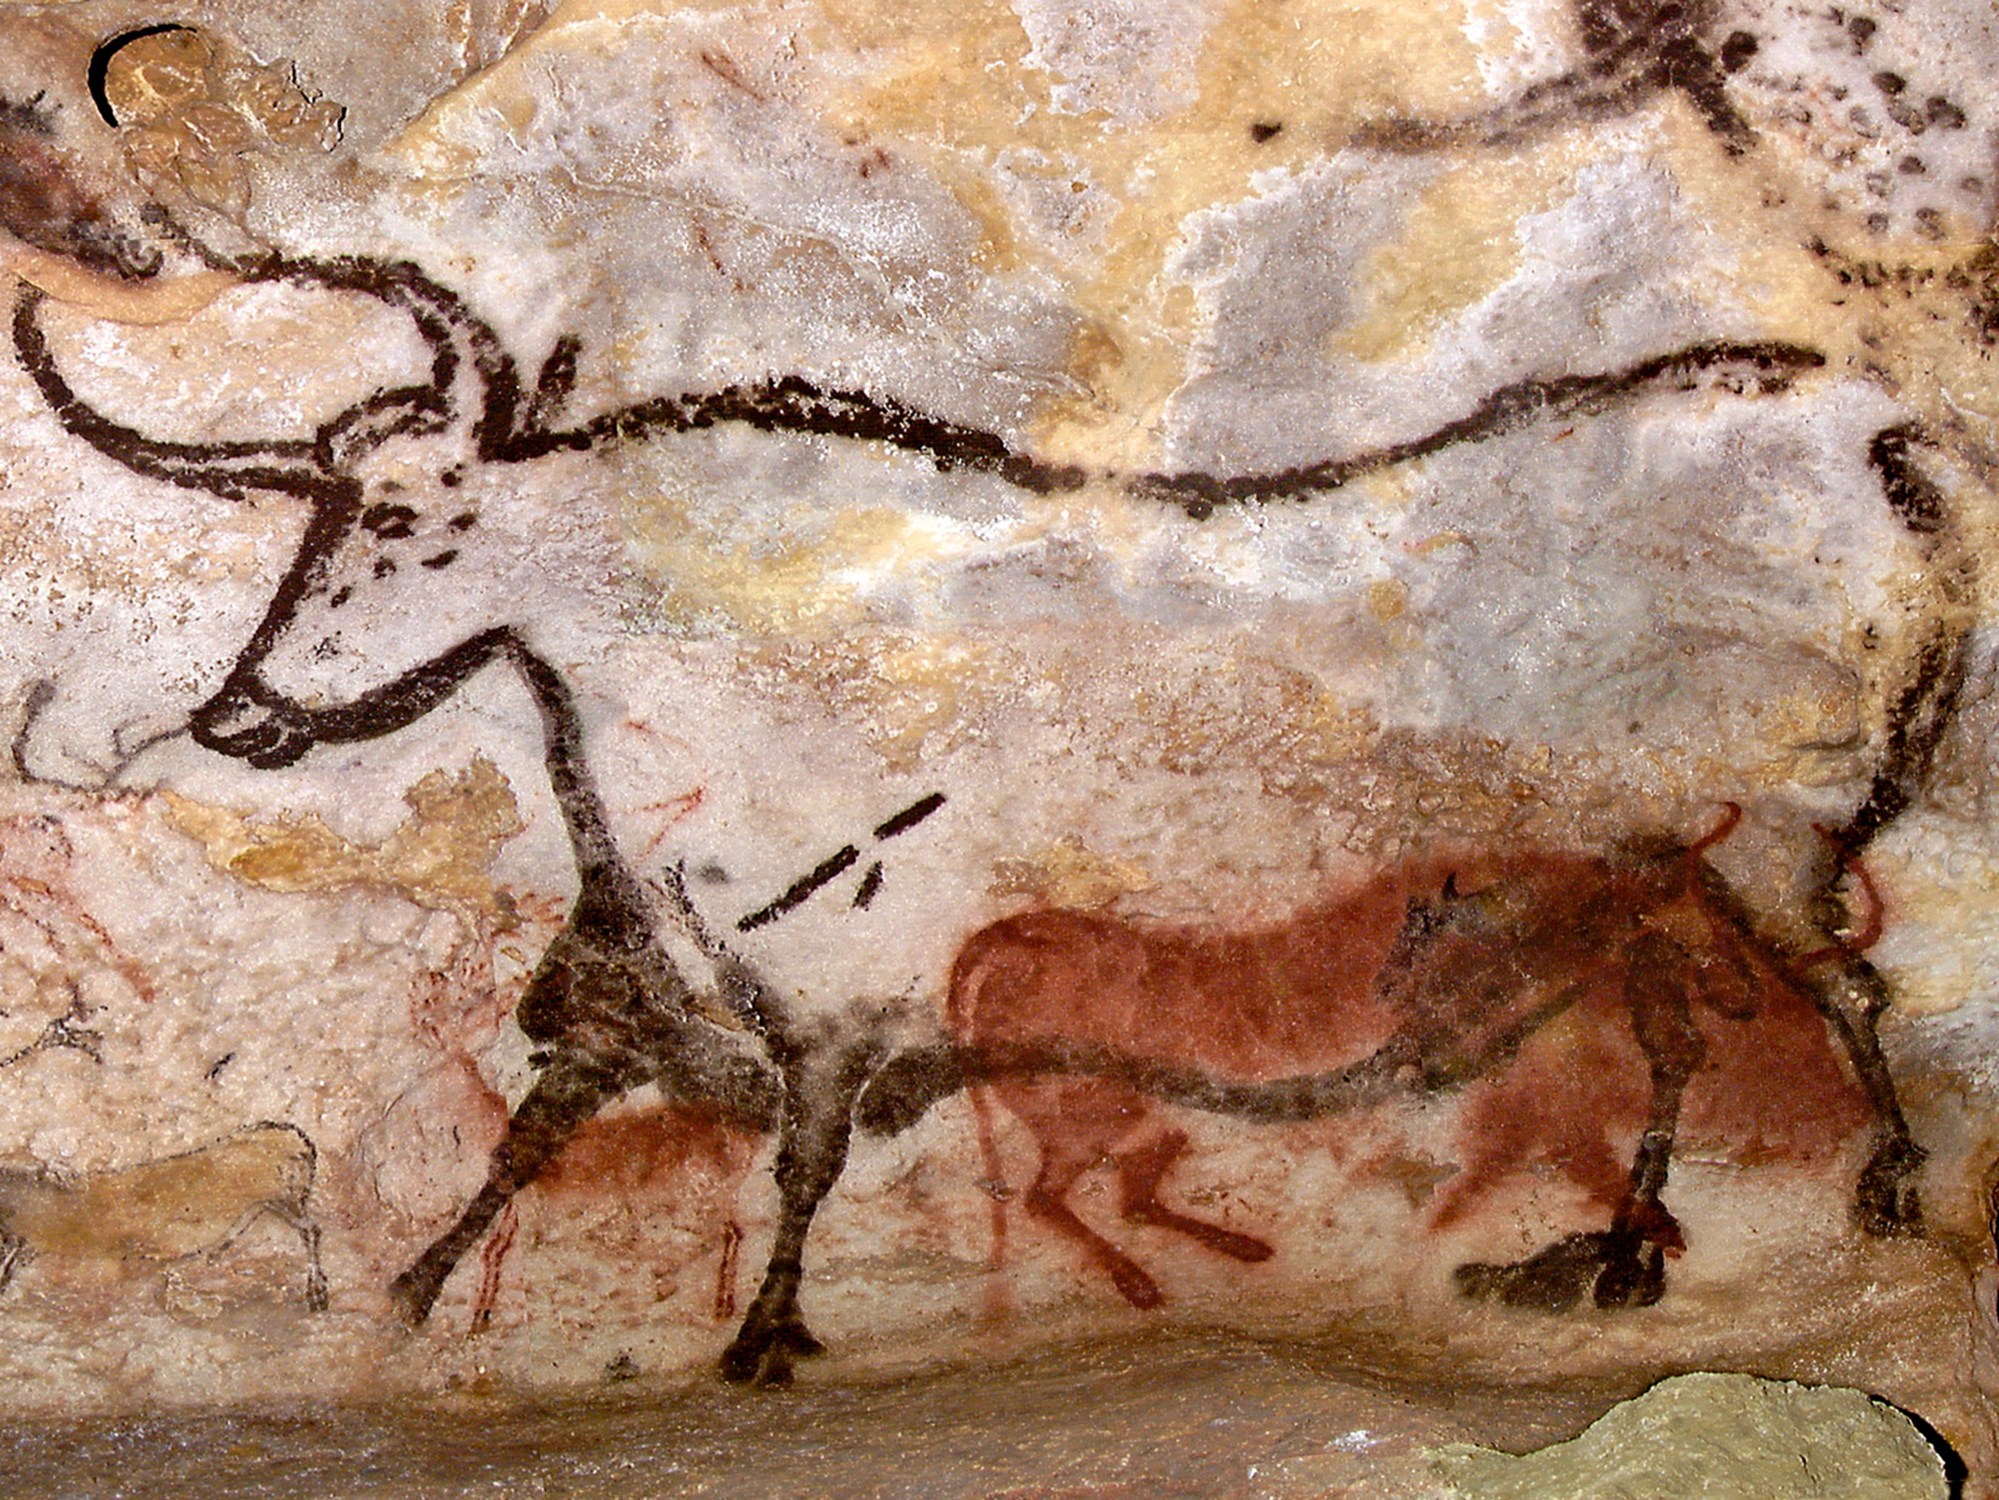 Amateur Archaeologist Decodes Ice Age Calendar in Cave Paintings – ARTnews.com